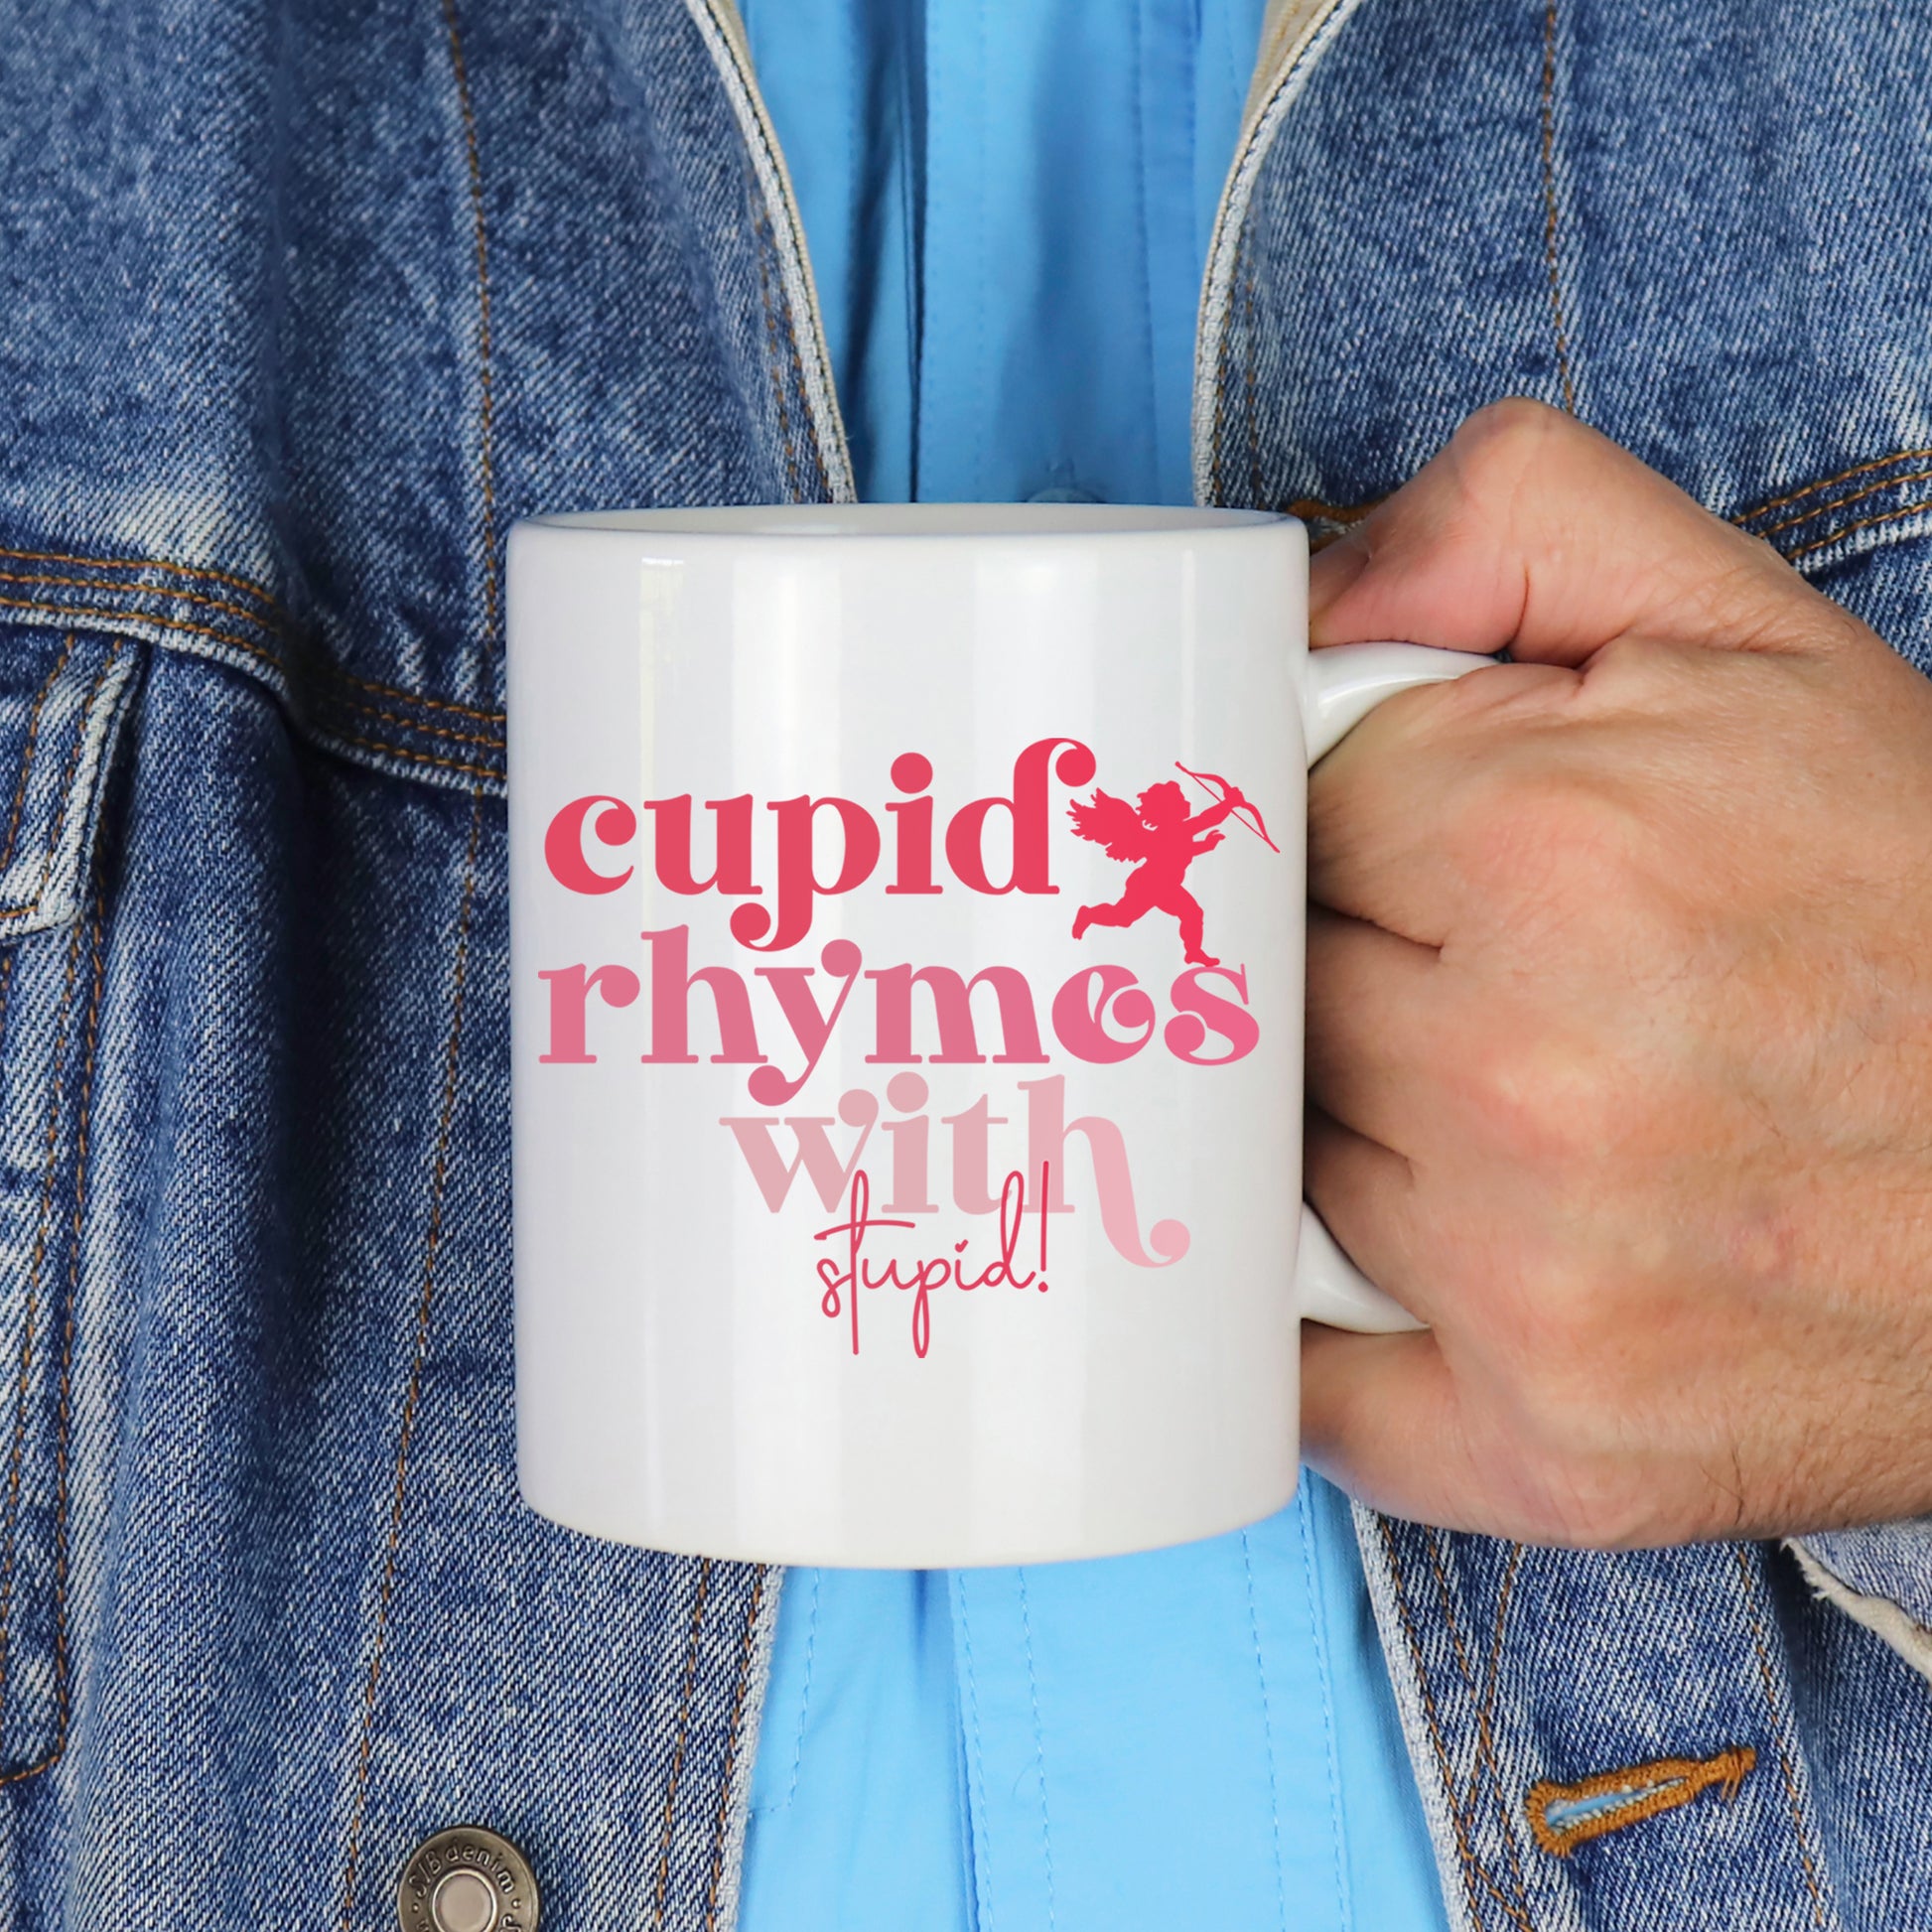 Cupid Rhymes With Stupid Mug and/or Coaster Set  - Always Looking Good -   